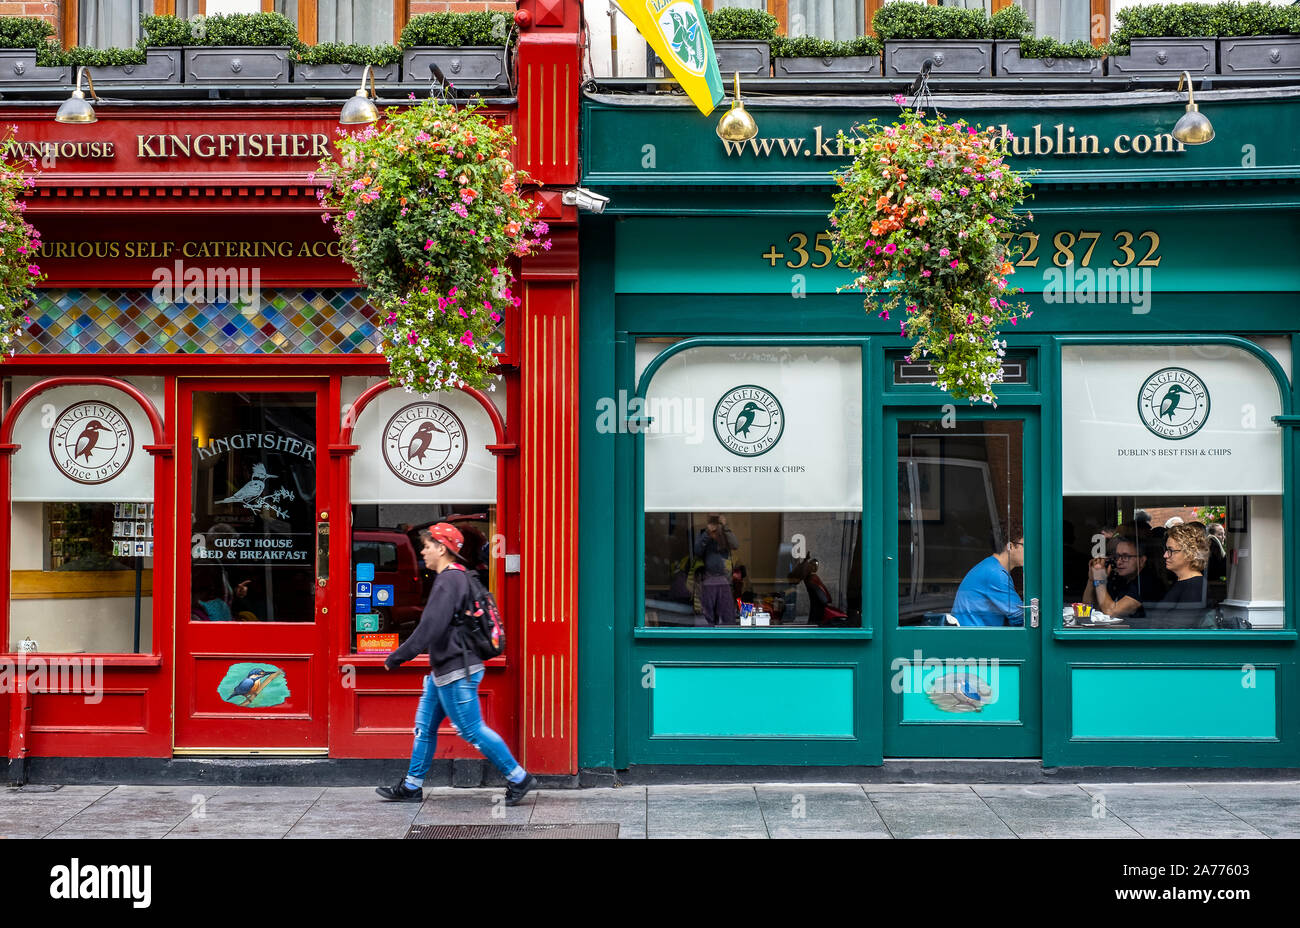 Facade of Kingfisher restaurnt, Parnell street, Dublin, Ireland Stock Photo